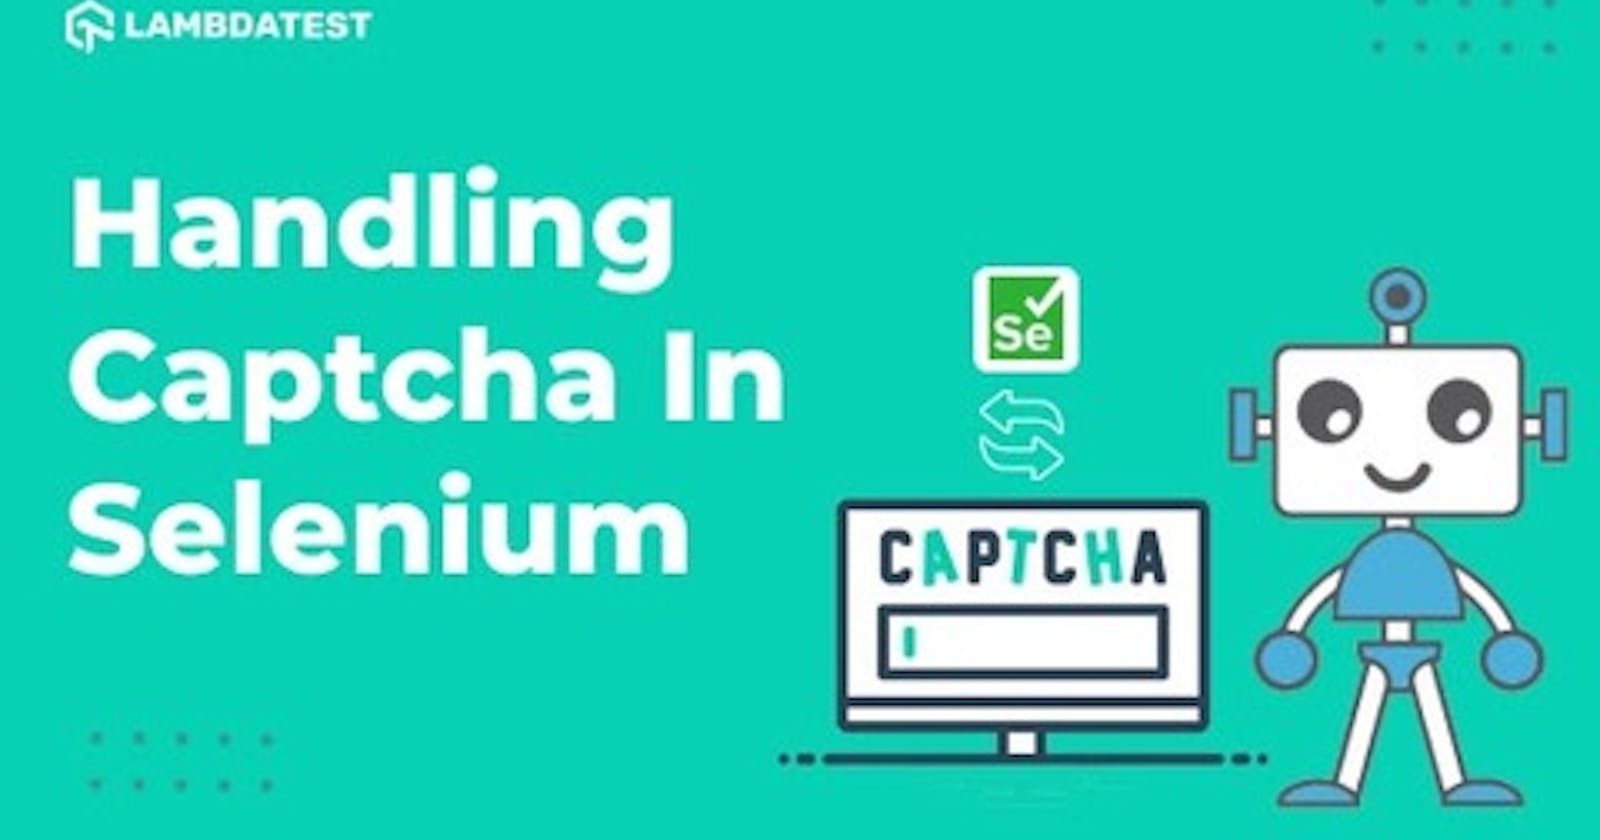 How To Handle Captcha In Selenium